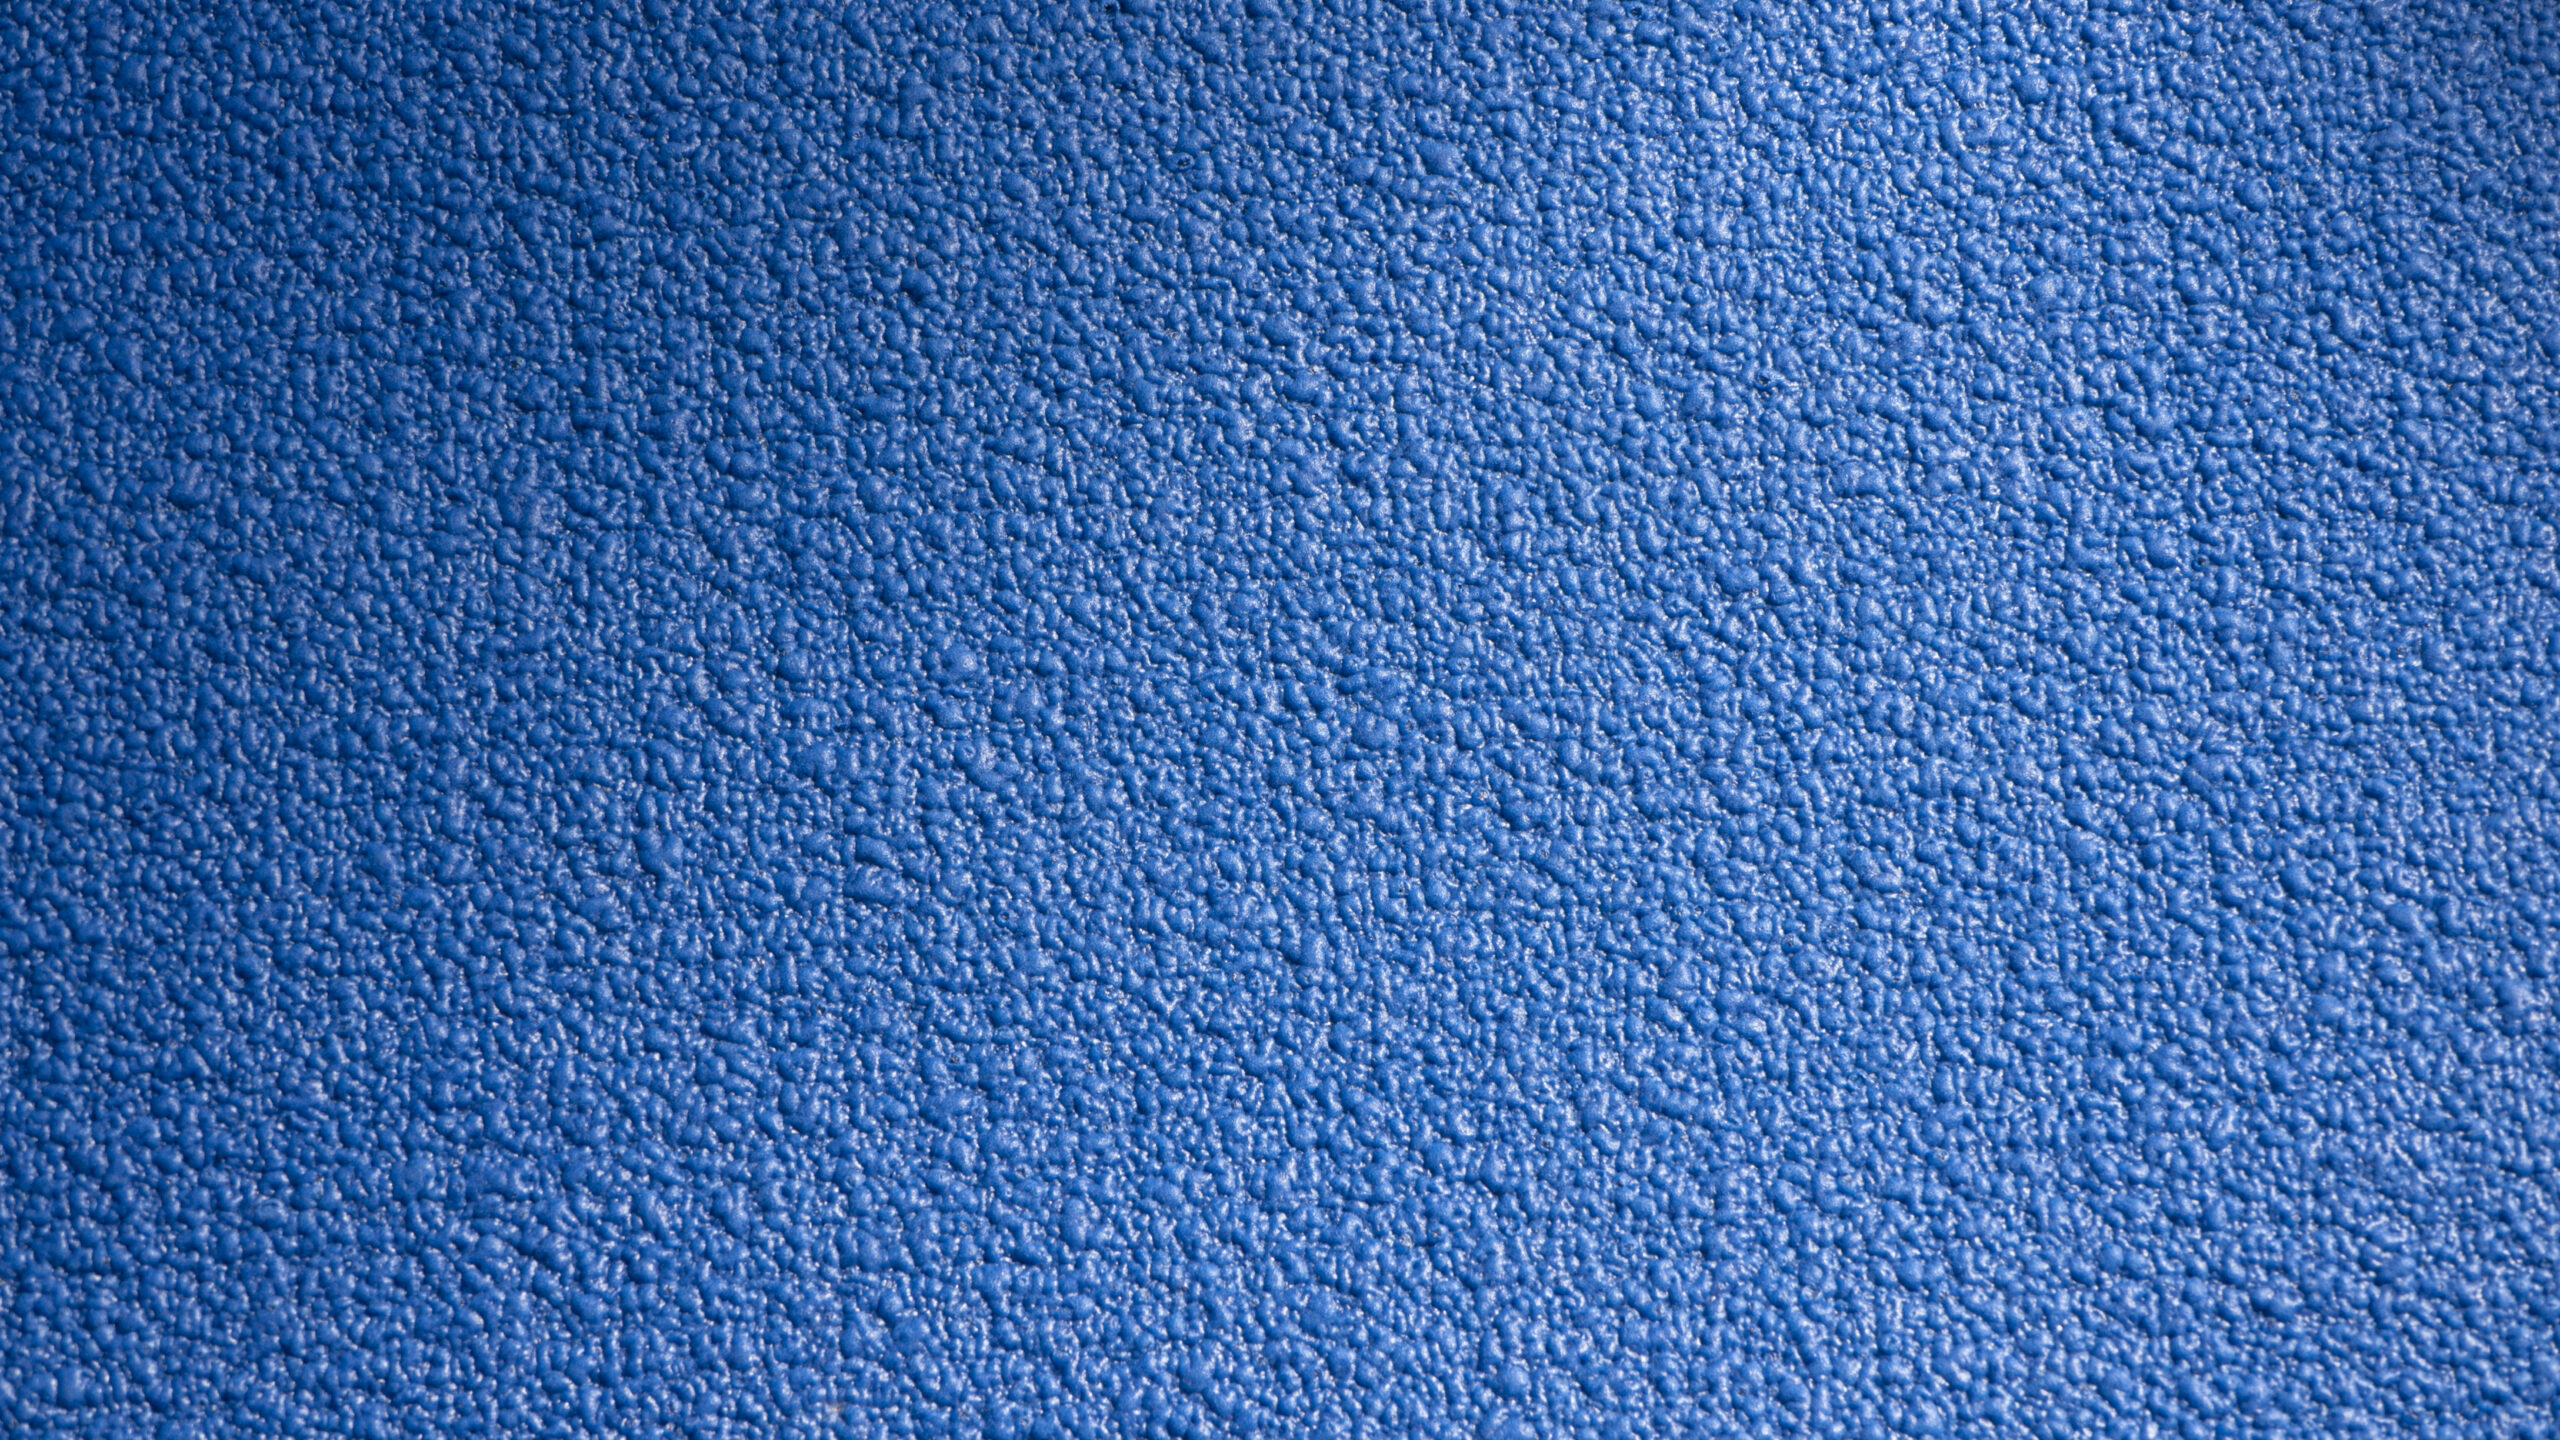 Blue yoga mat background